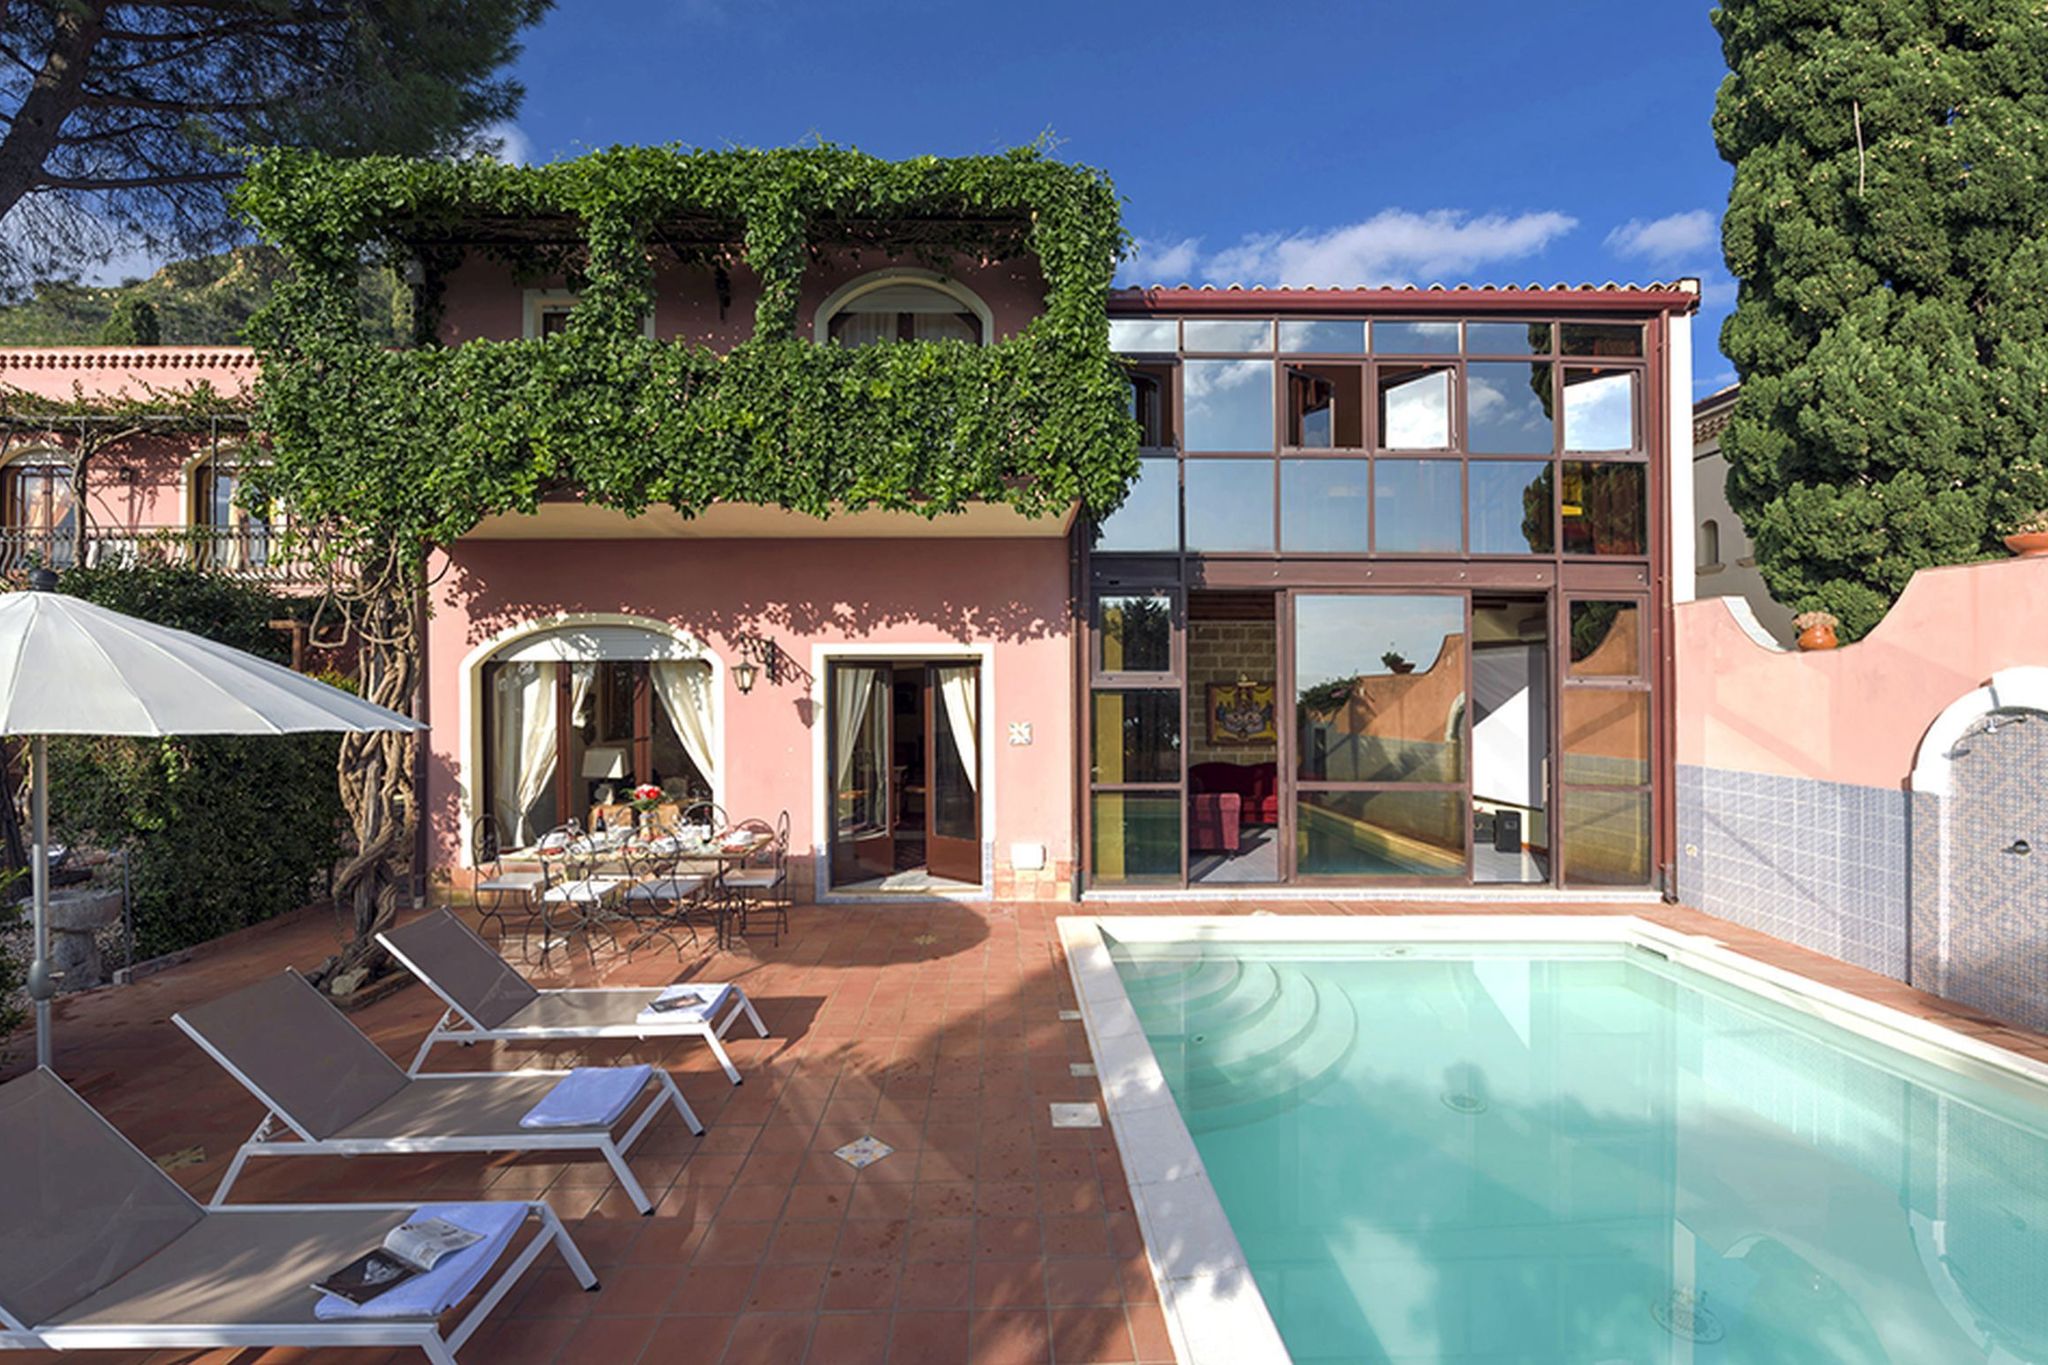 Sea-view villa in Taormina with private pool